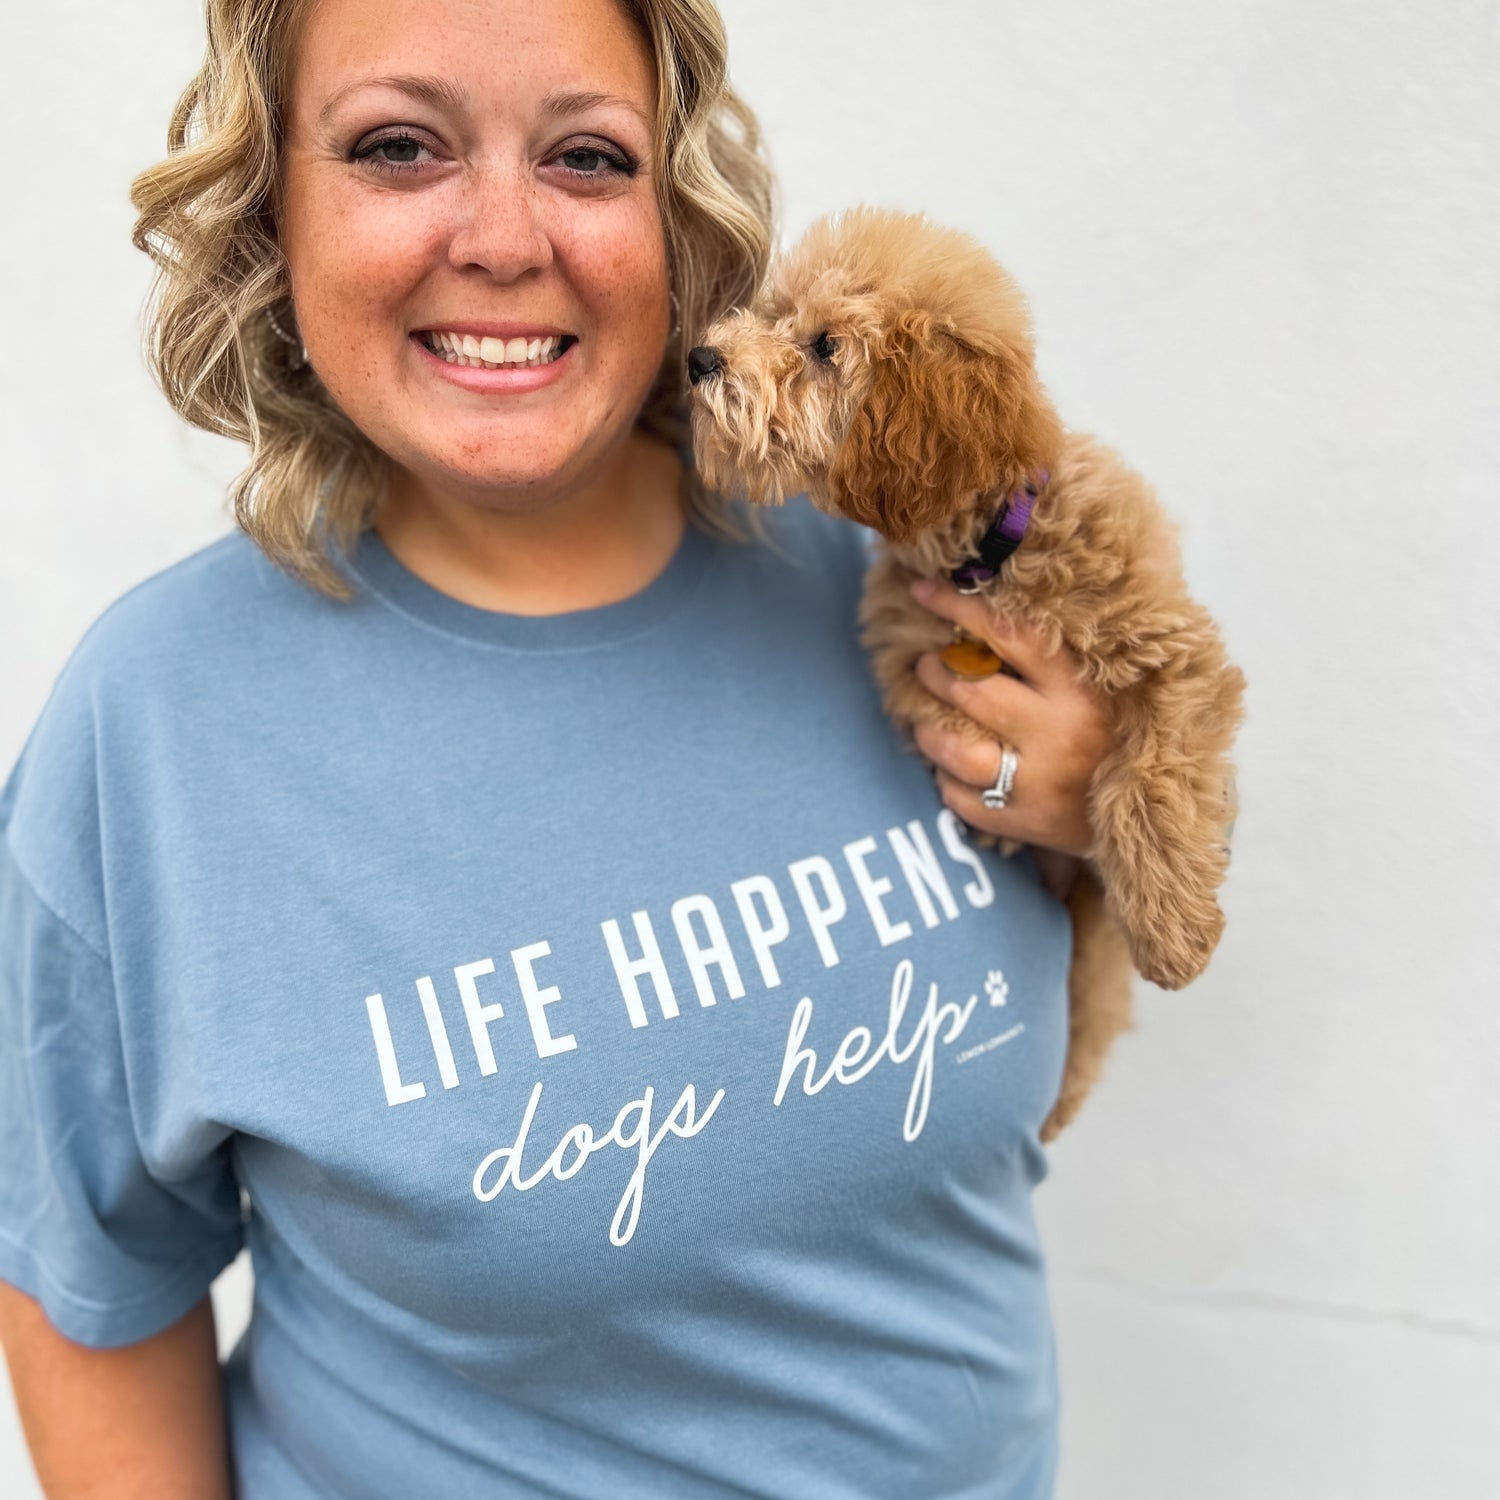 LIFE HAPPENS DOGS HELP - Comfort Wash Graphic Tee